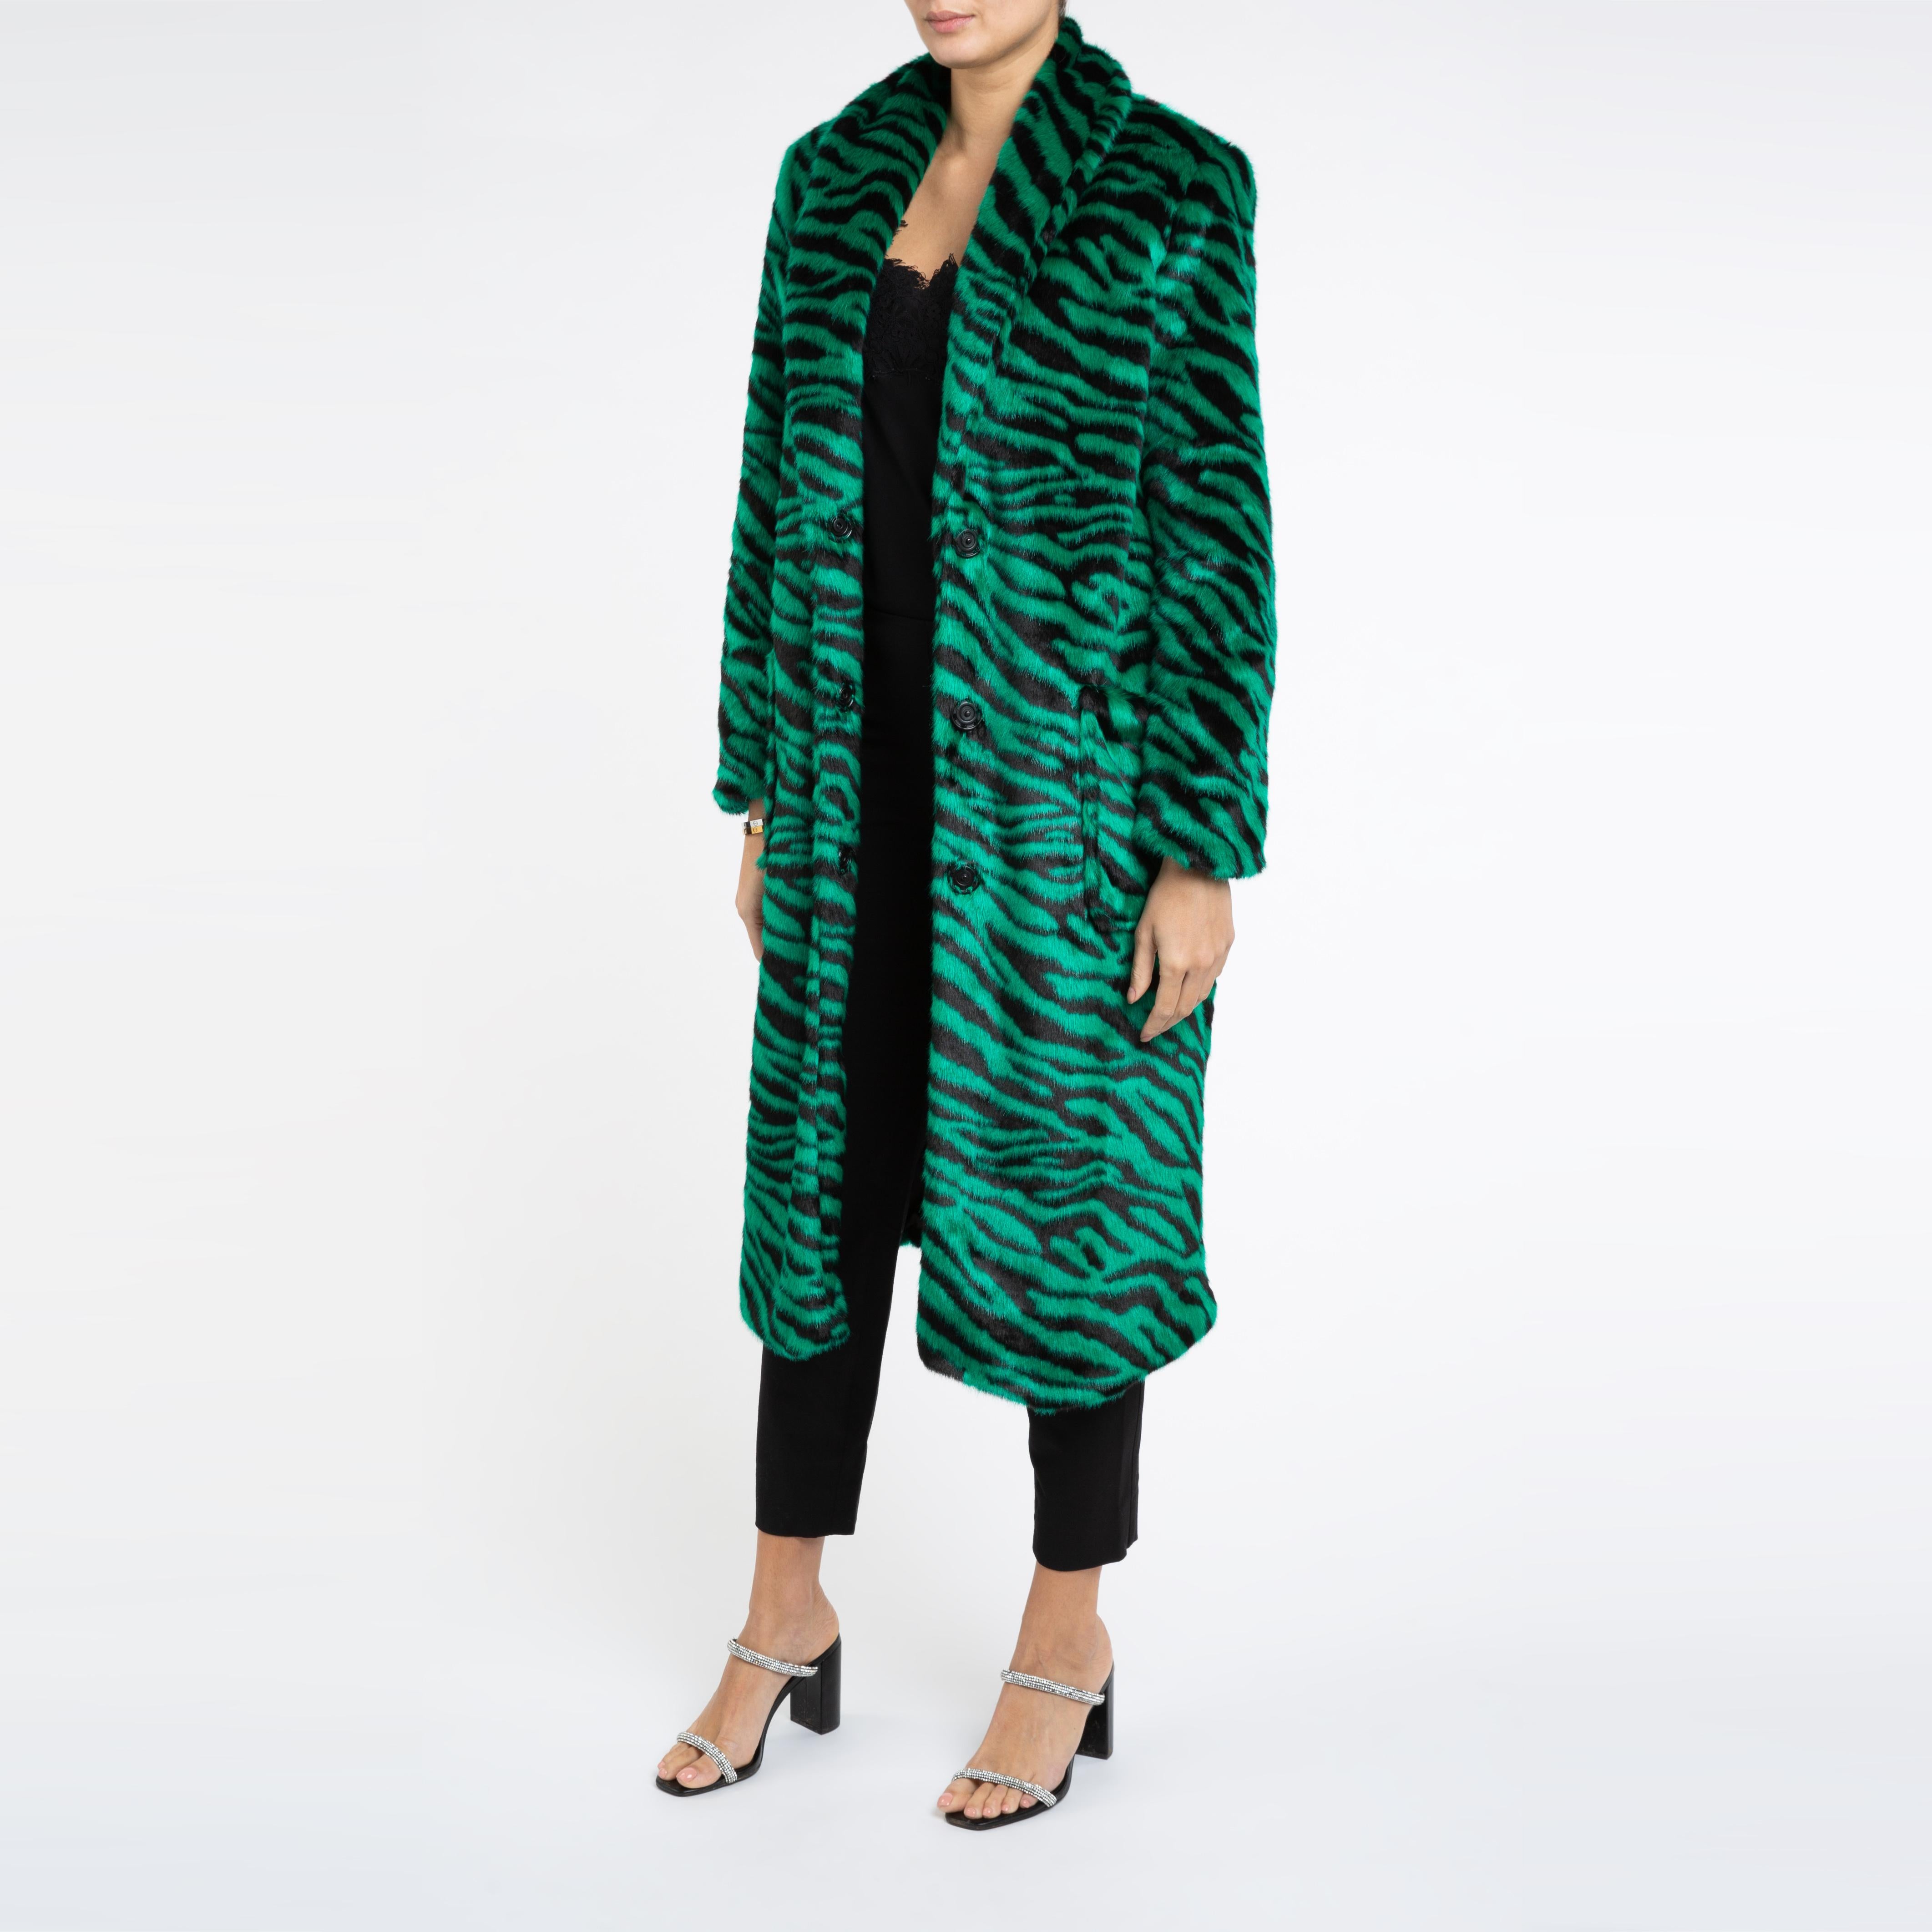 Women's Verheyen London Esmeralda Faux Fur Coat in Emerald Green Zebra Print size uk 8 For Sale